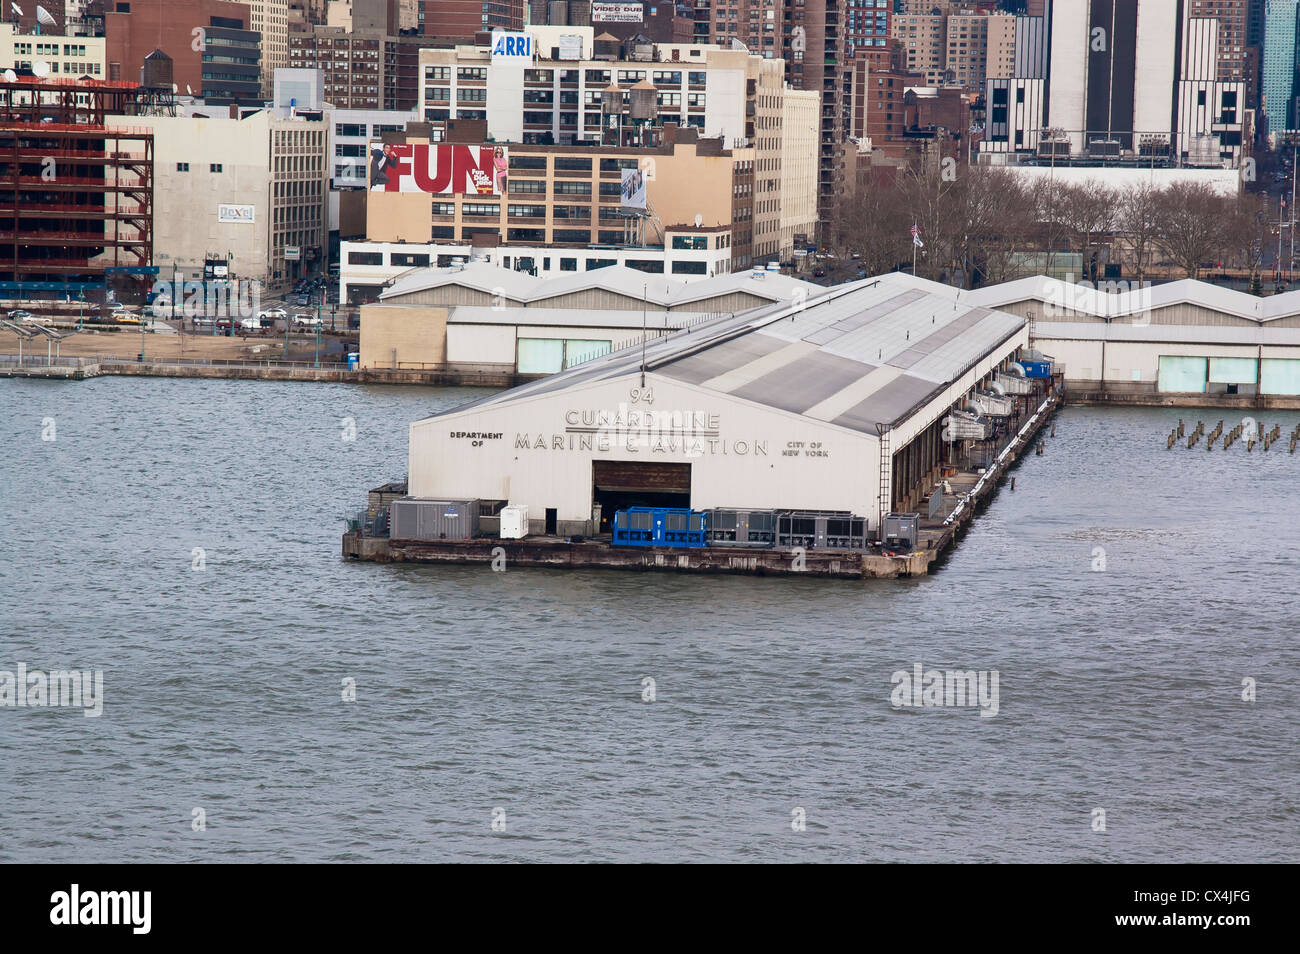 Guard Line, Marine and Aviation pier, Manhattan, New York City, USA Stock Photo